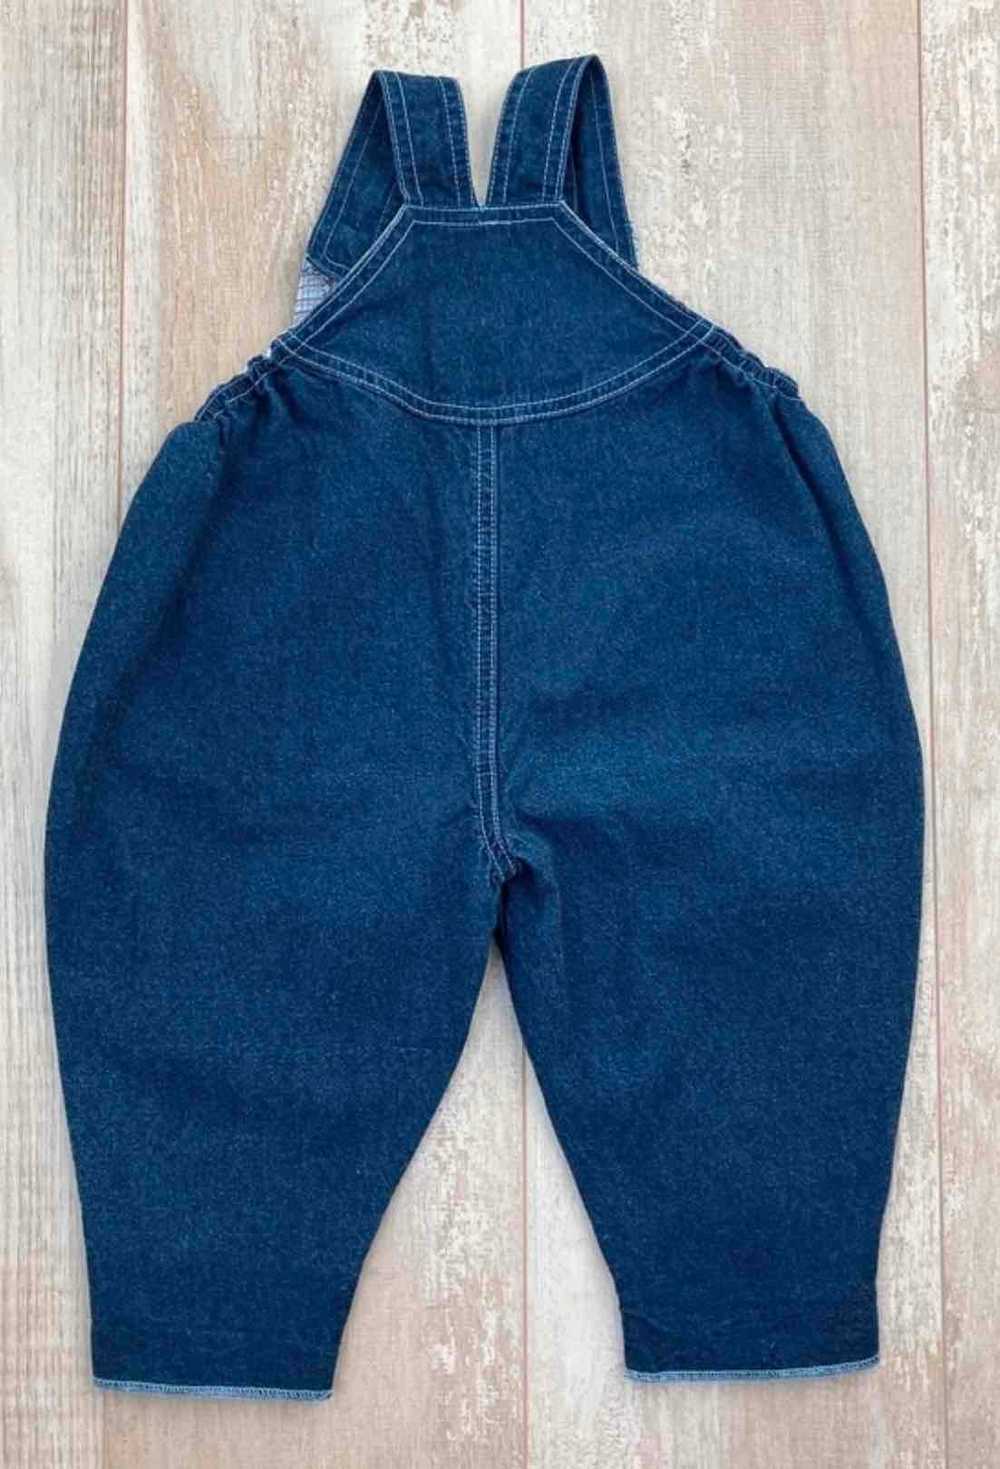 Denim overalls - Overalls in soft cotton denim - image 2